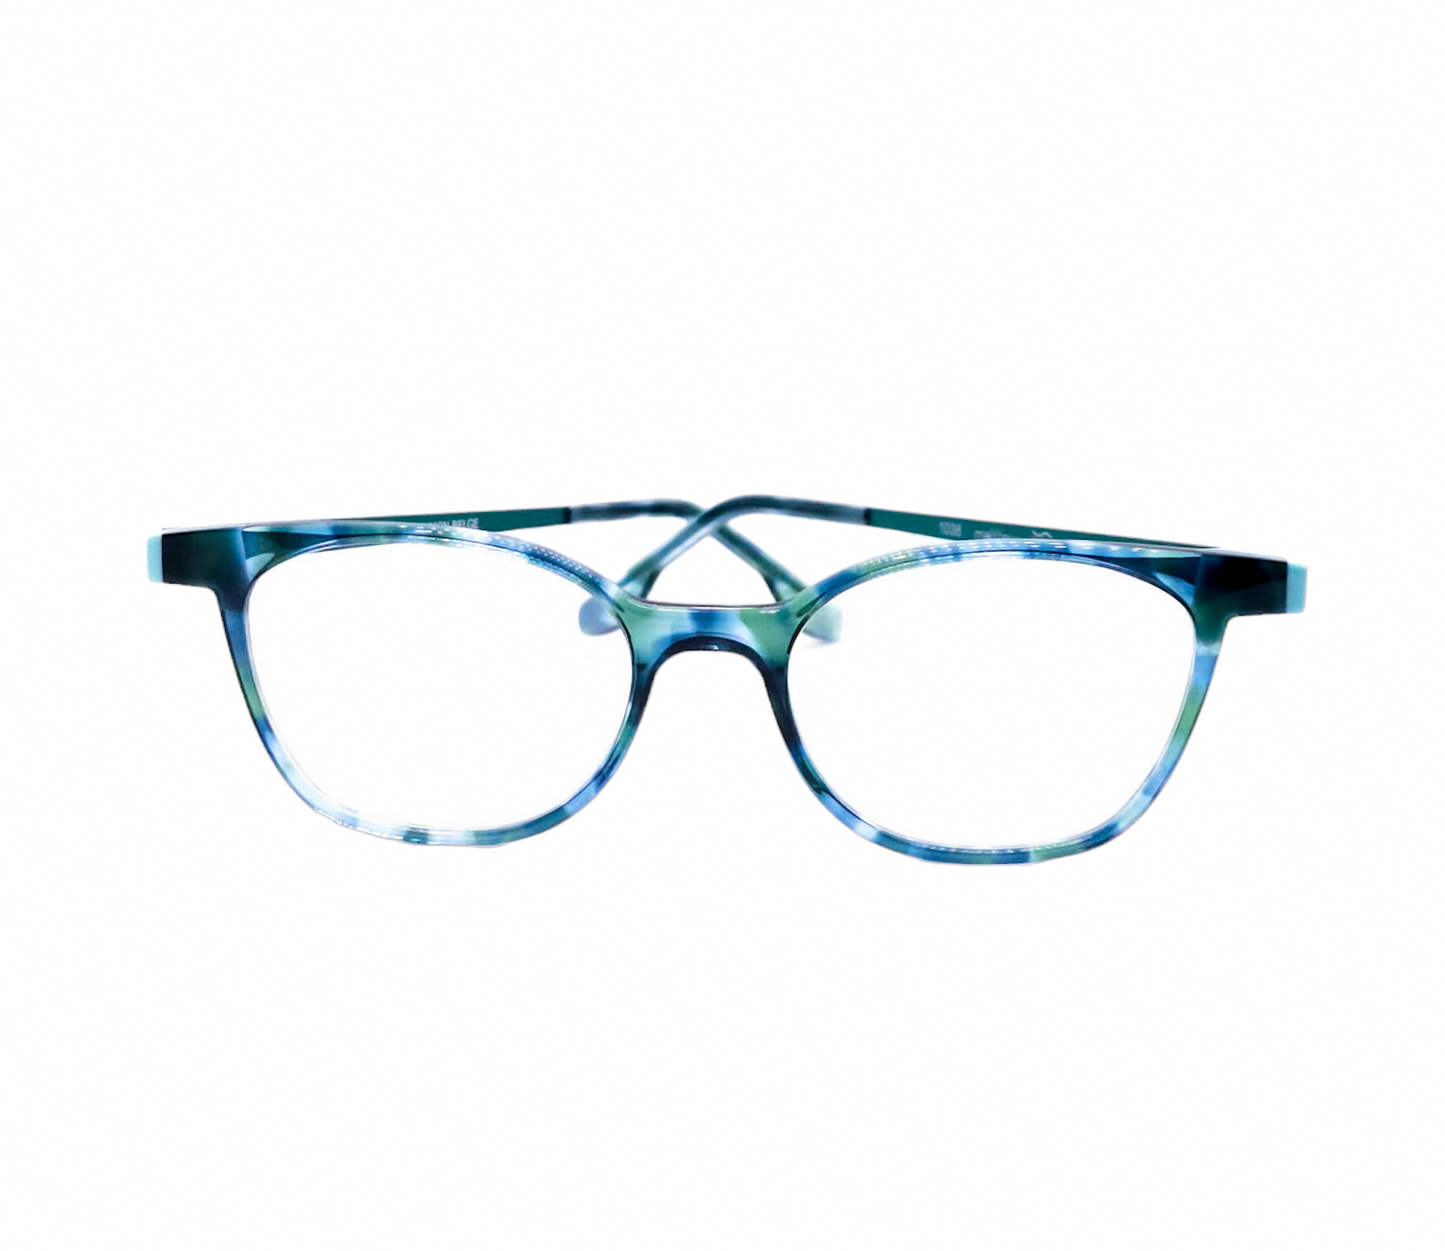 Matttew Timor eyeglasses color 1036 Blue Scale / Emeral